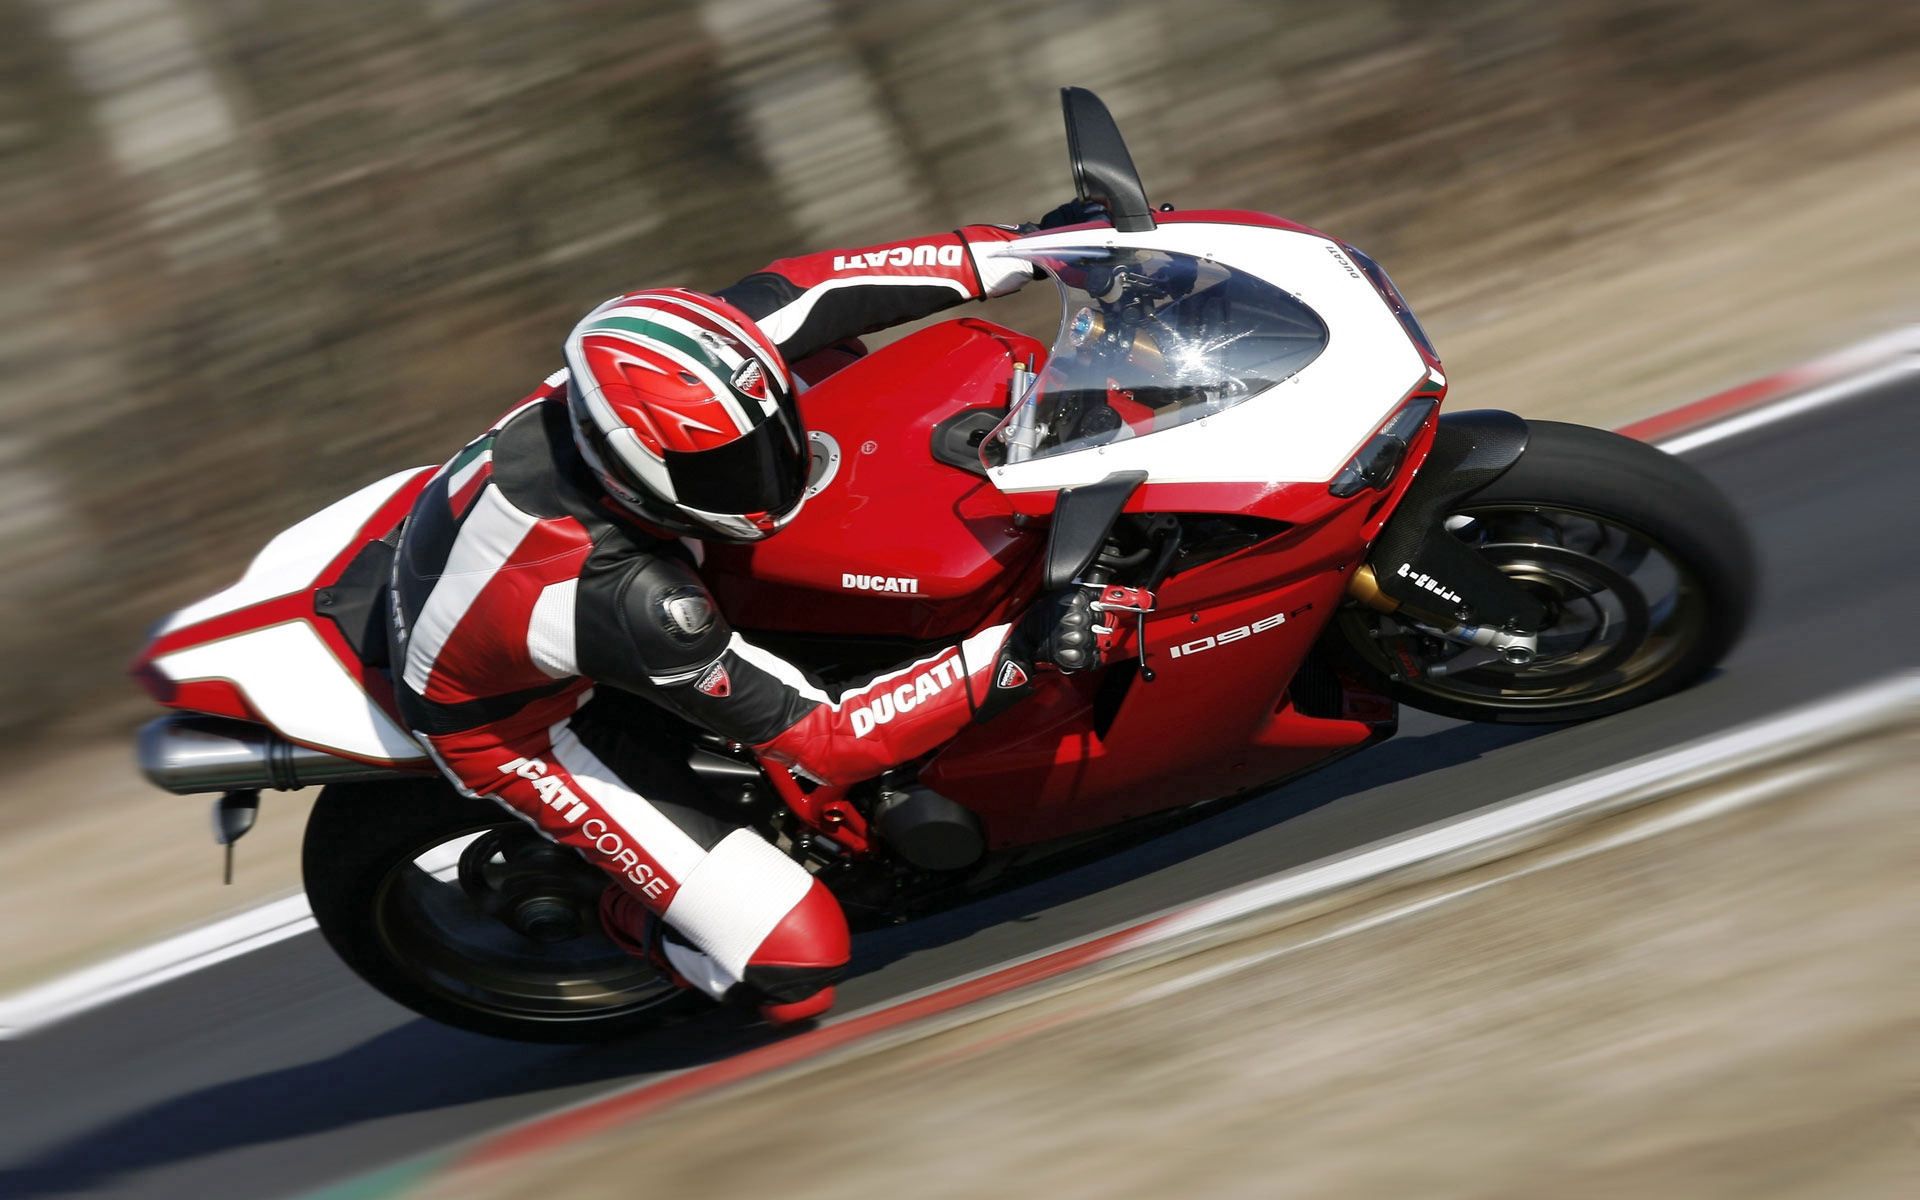 ducati 1098, in move, afoot, motobike, motorcycles, ducati, red, motorbike